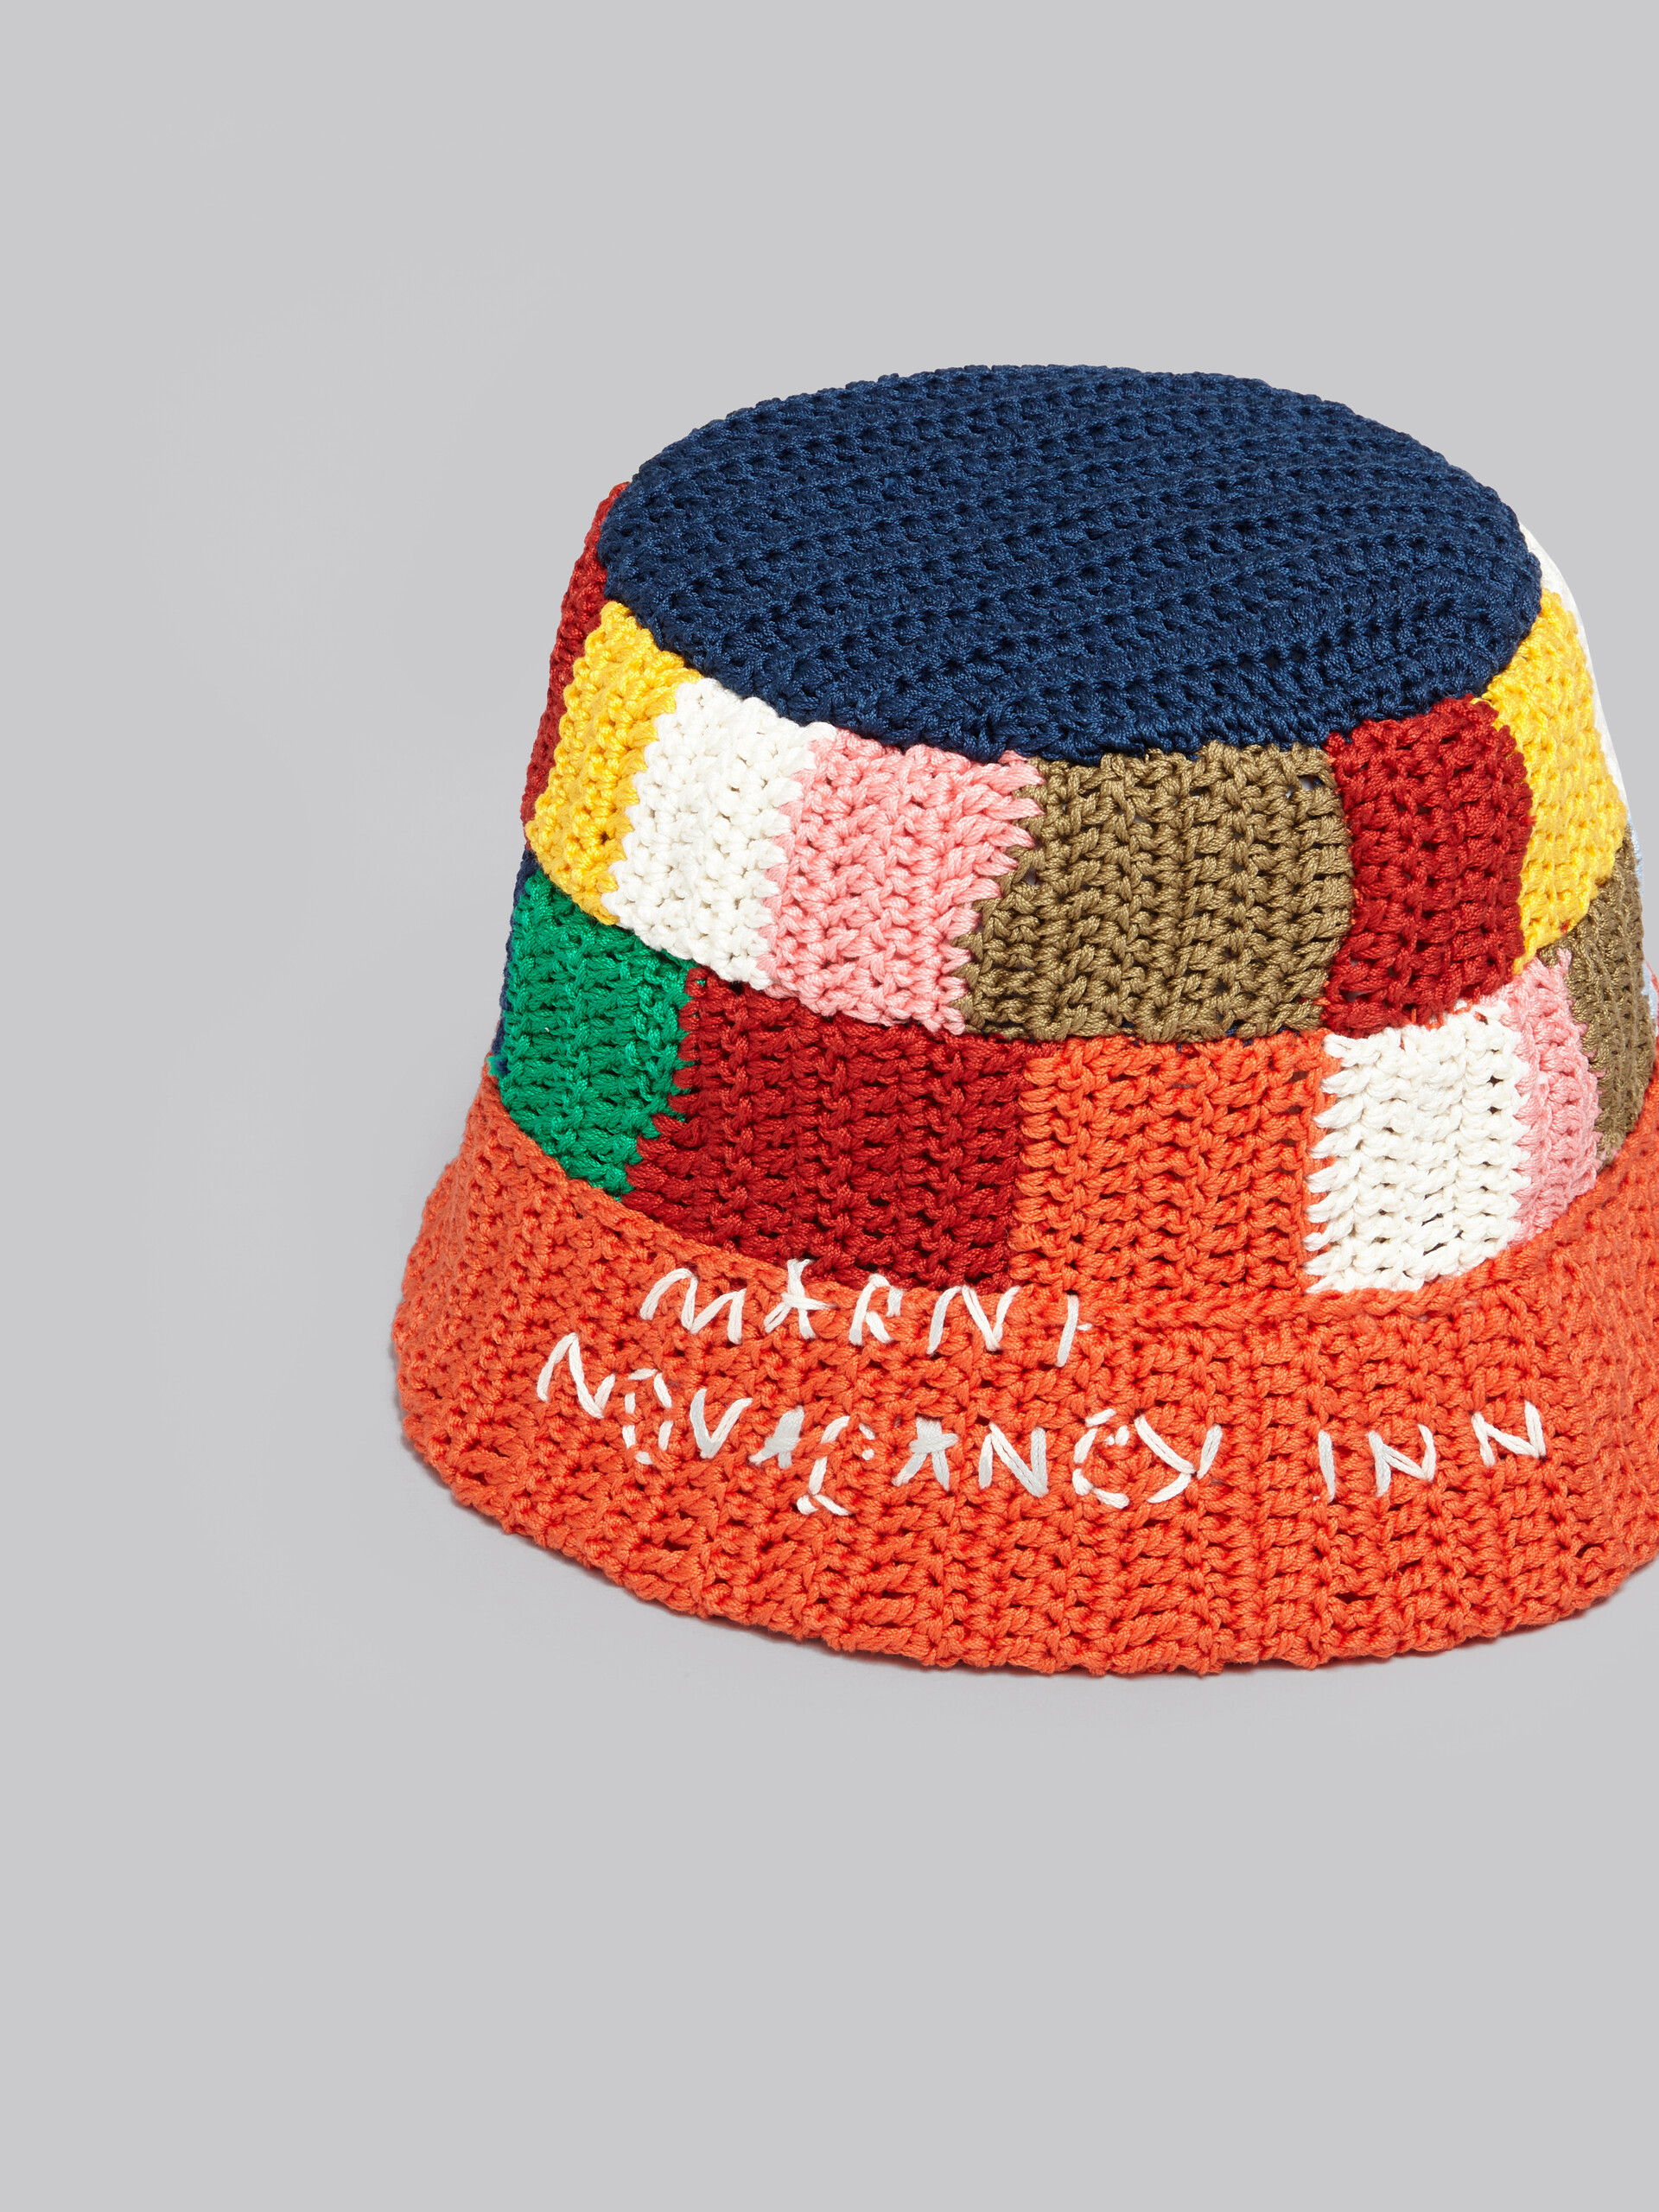 Marni x No Vacancy Inn - Multicolour cotton-knit bucket hat - Hats - Image 4